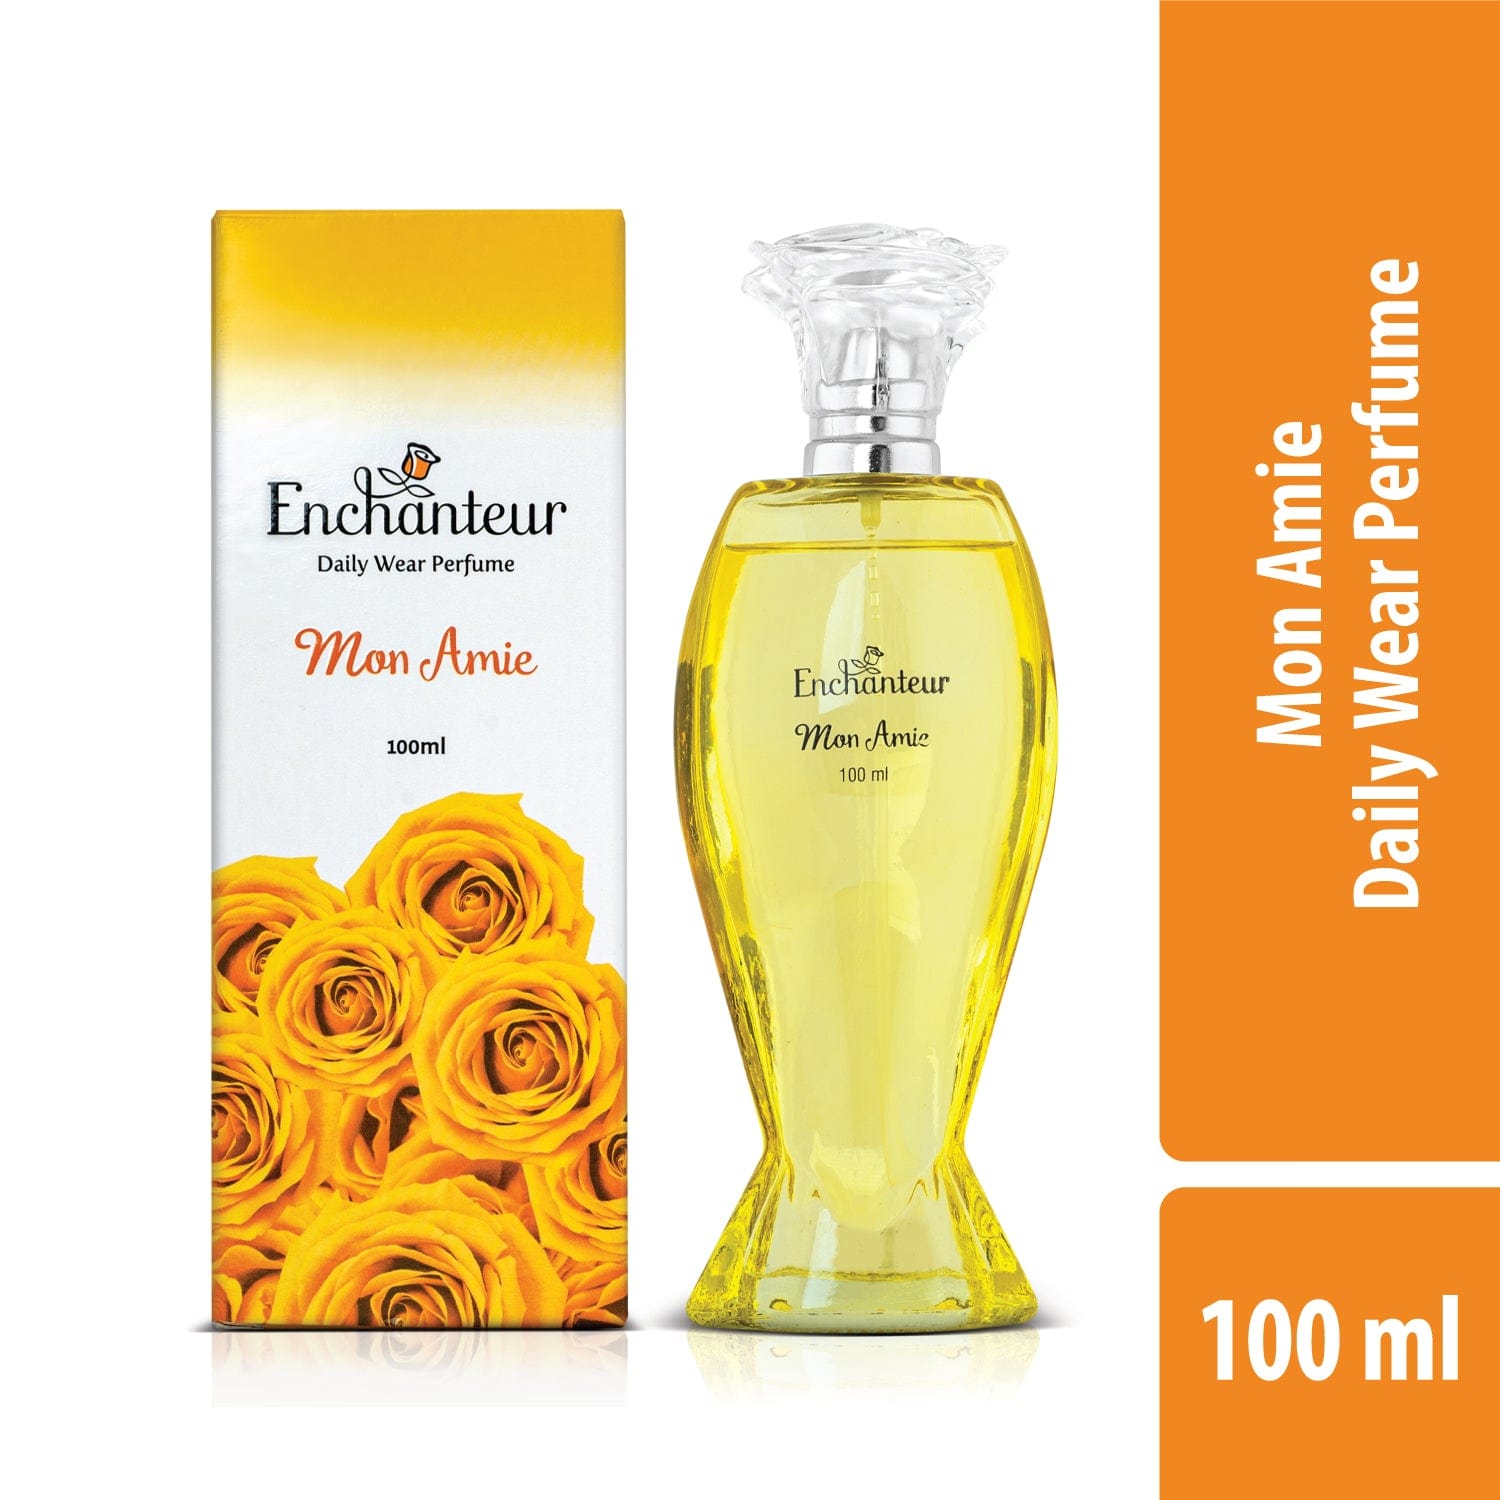 Enchanteur Mon Amie Daily wear Perfume for Women, 100ml By Enchanteur